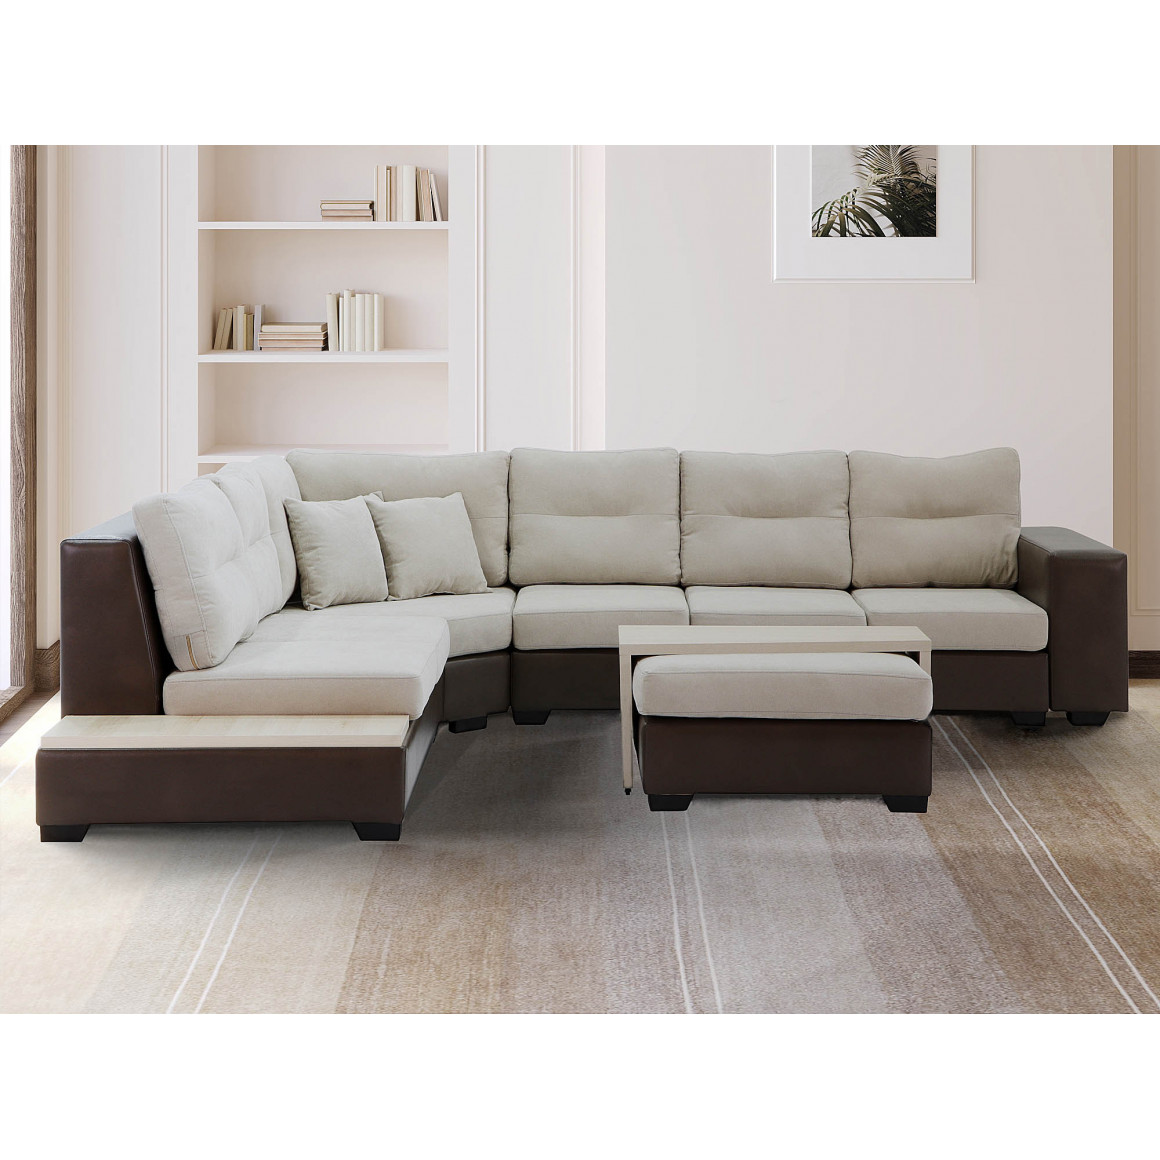 sofa HOBEL CORNER CORONA DARK BEIGE PHANTOM 13/BEIGE BREEZE 2 L (11)